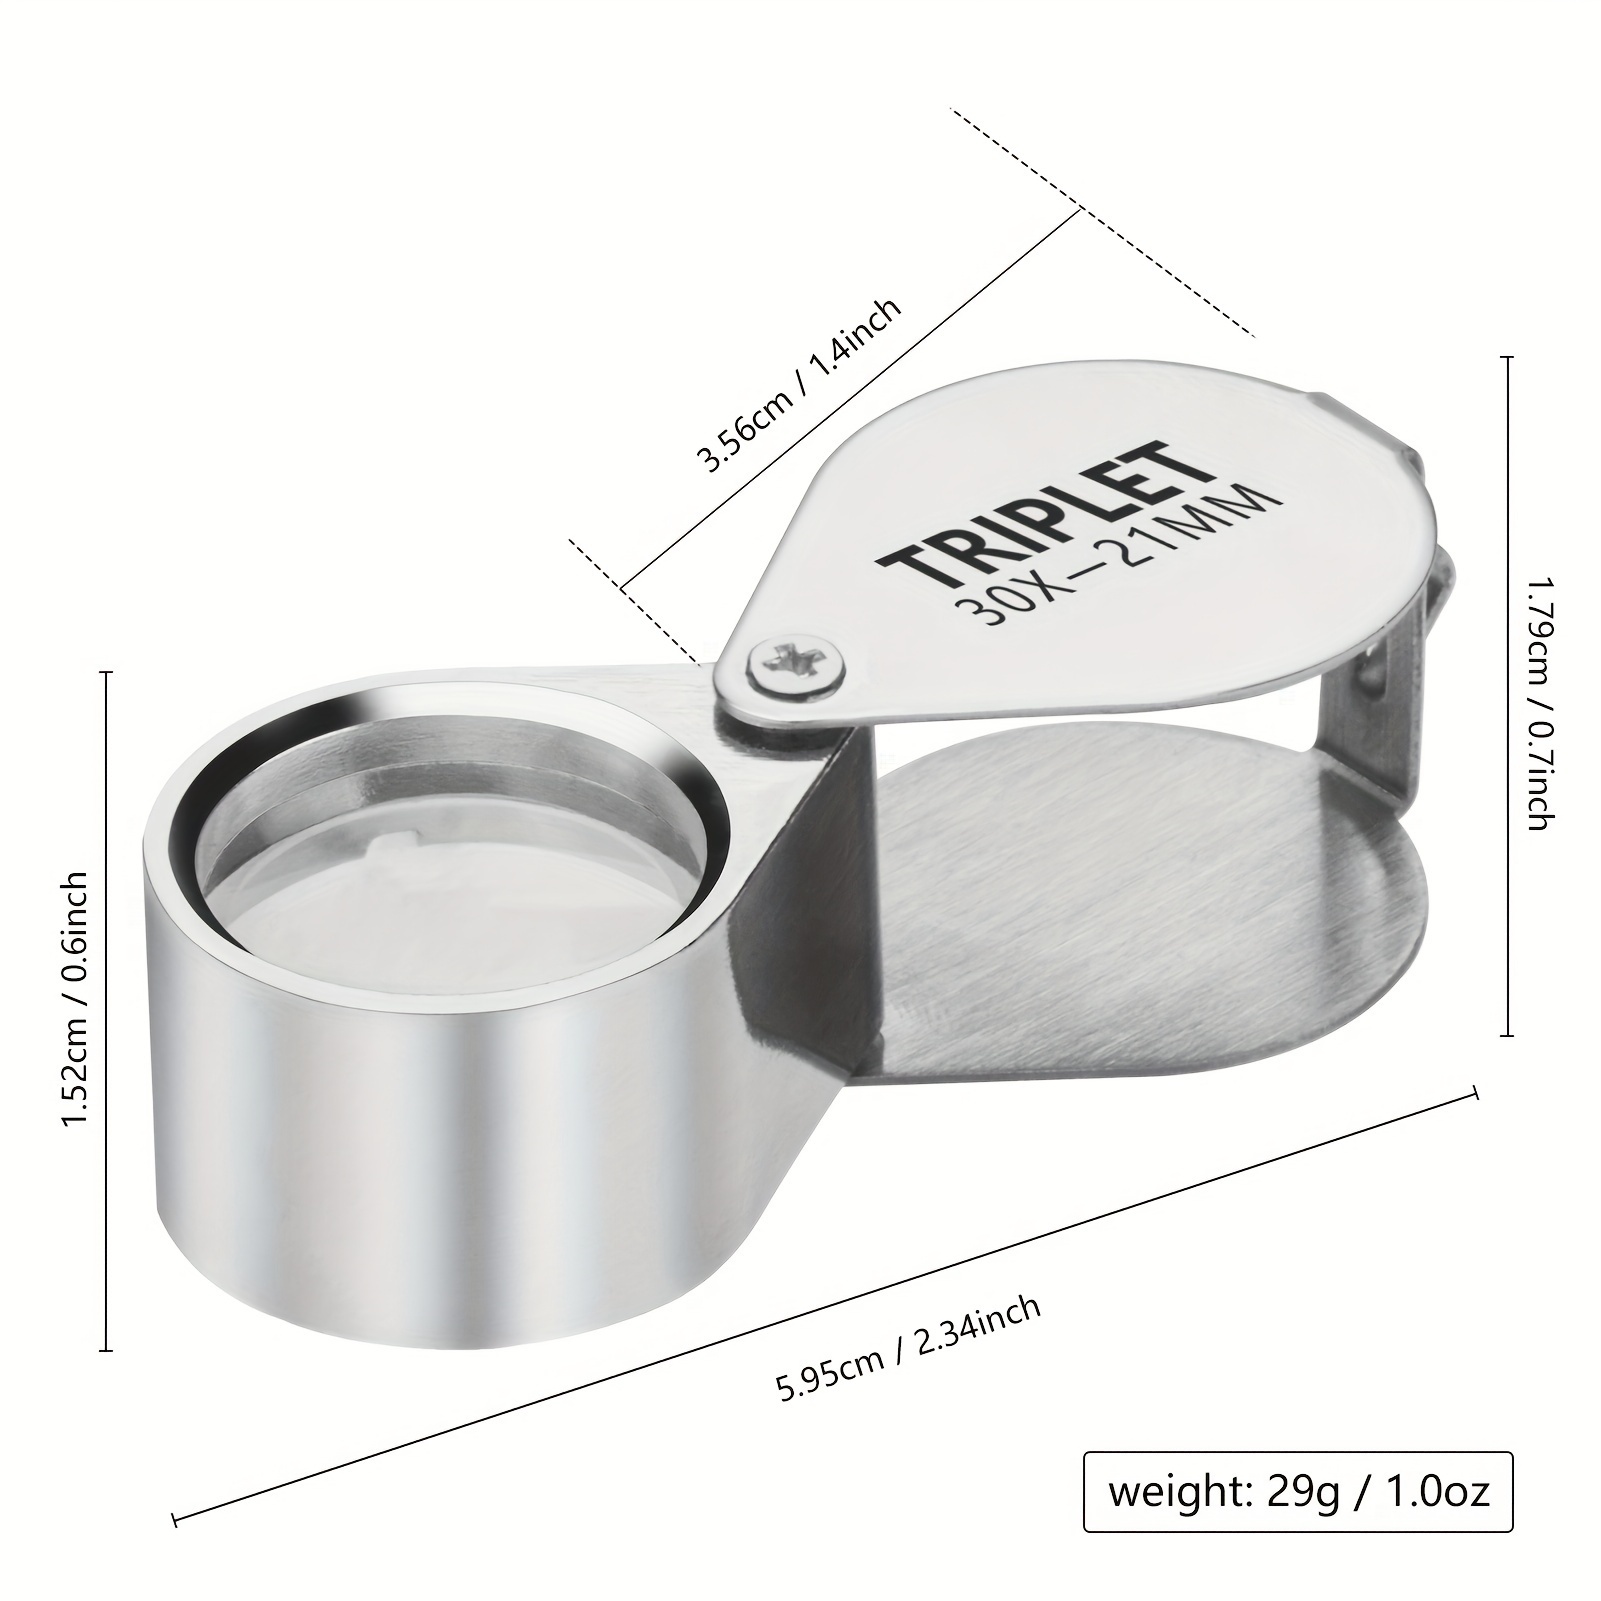 30x Jewelers Eye Magnifying Glass Pocket Jewelry Loupe Mini - Temu